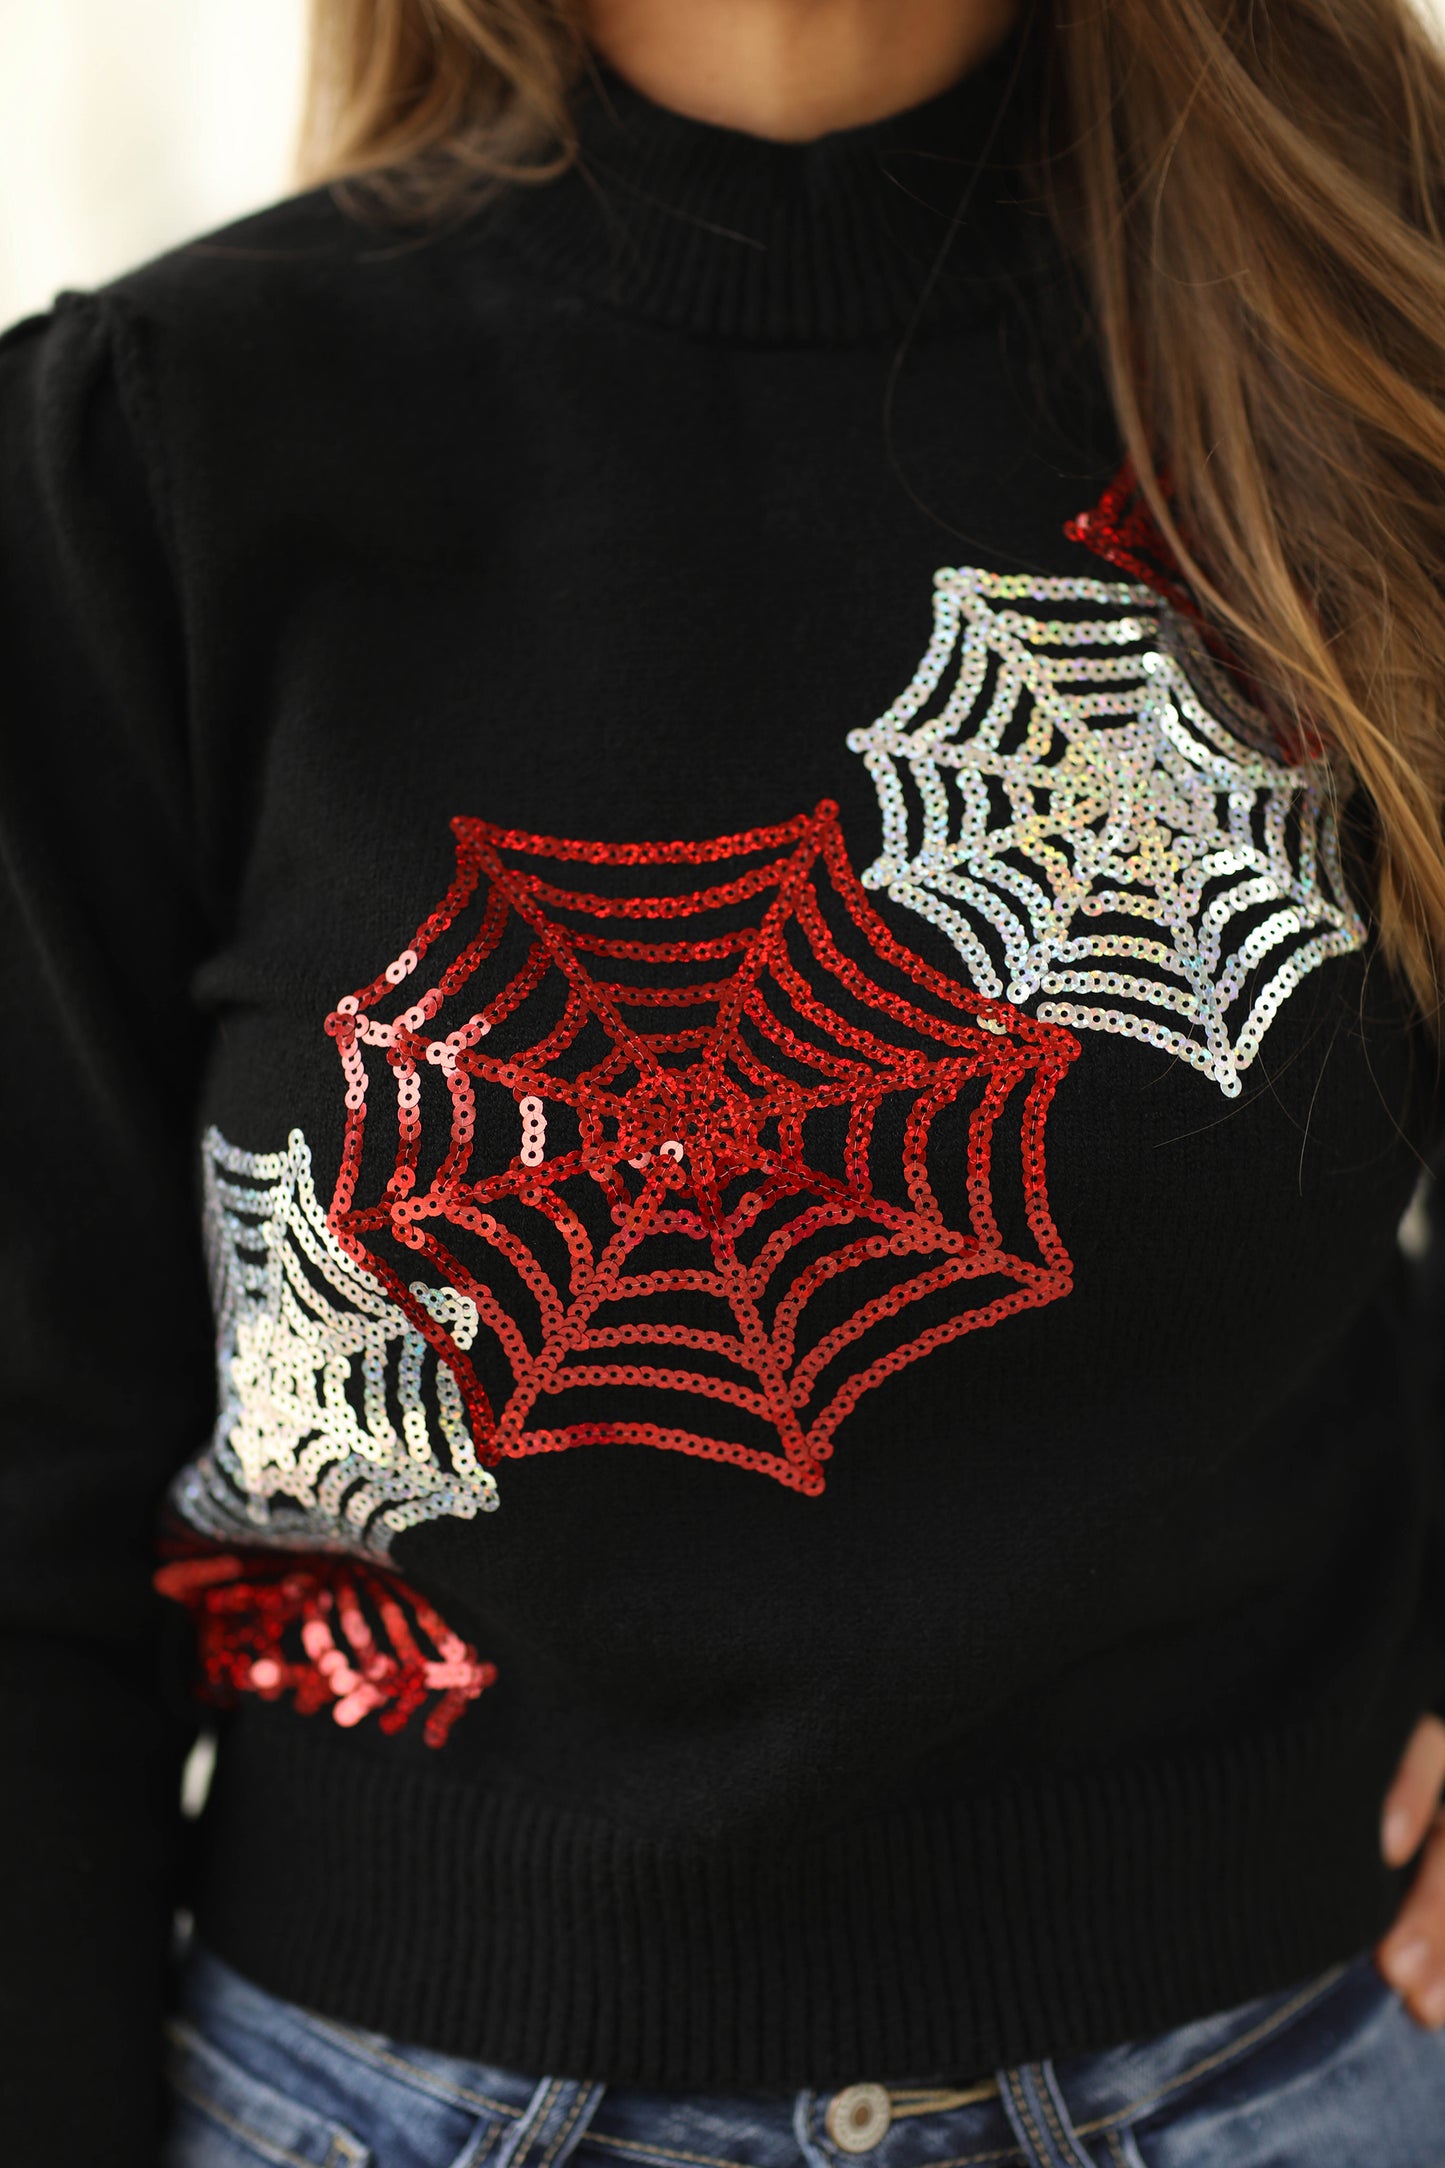 Spider Web Sequin Black Sweater